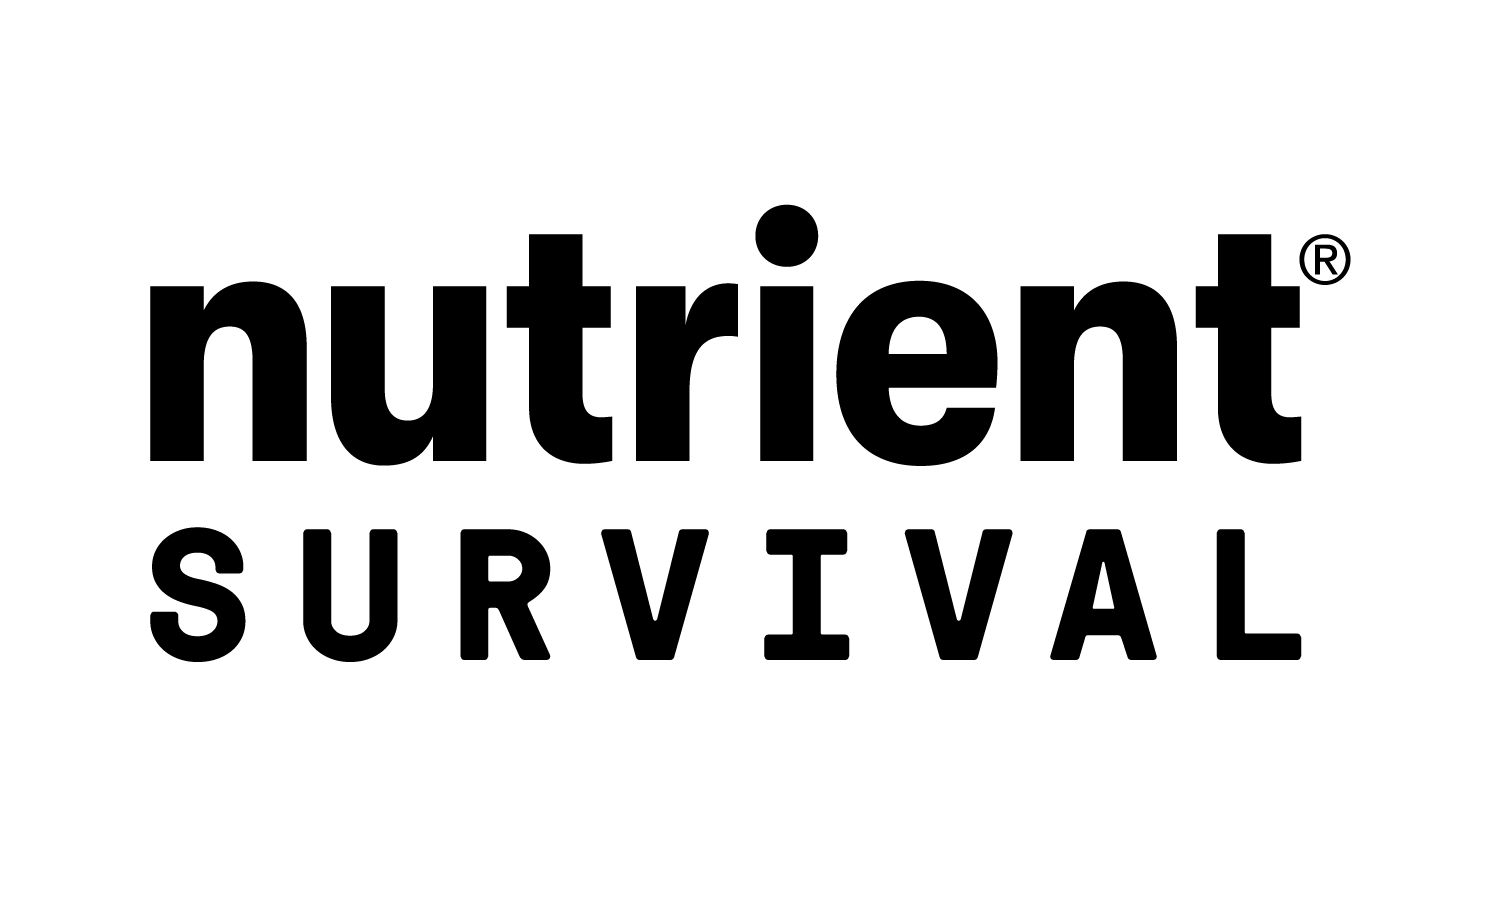 Nutrient Survival